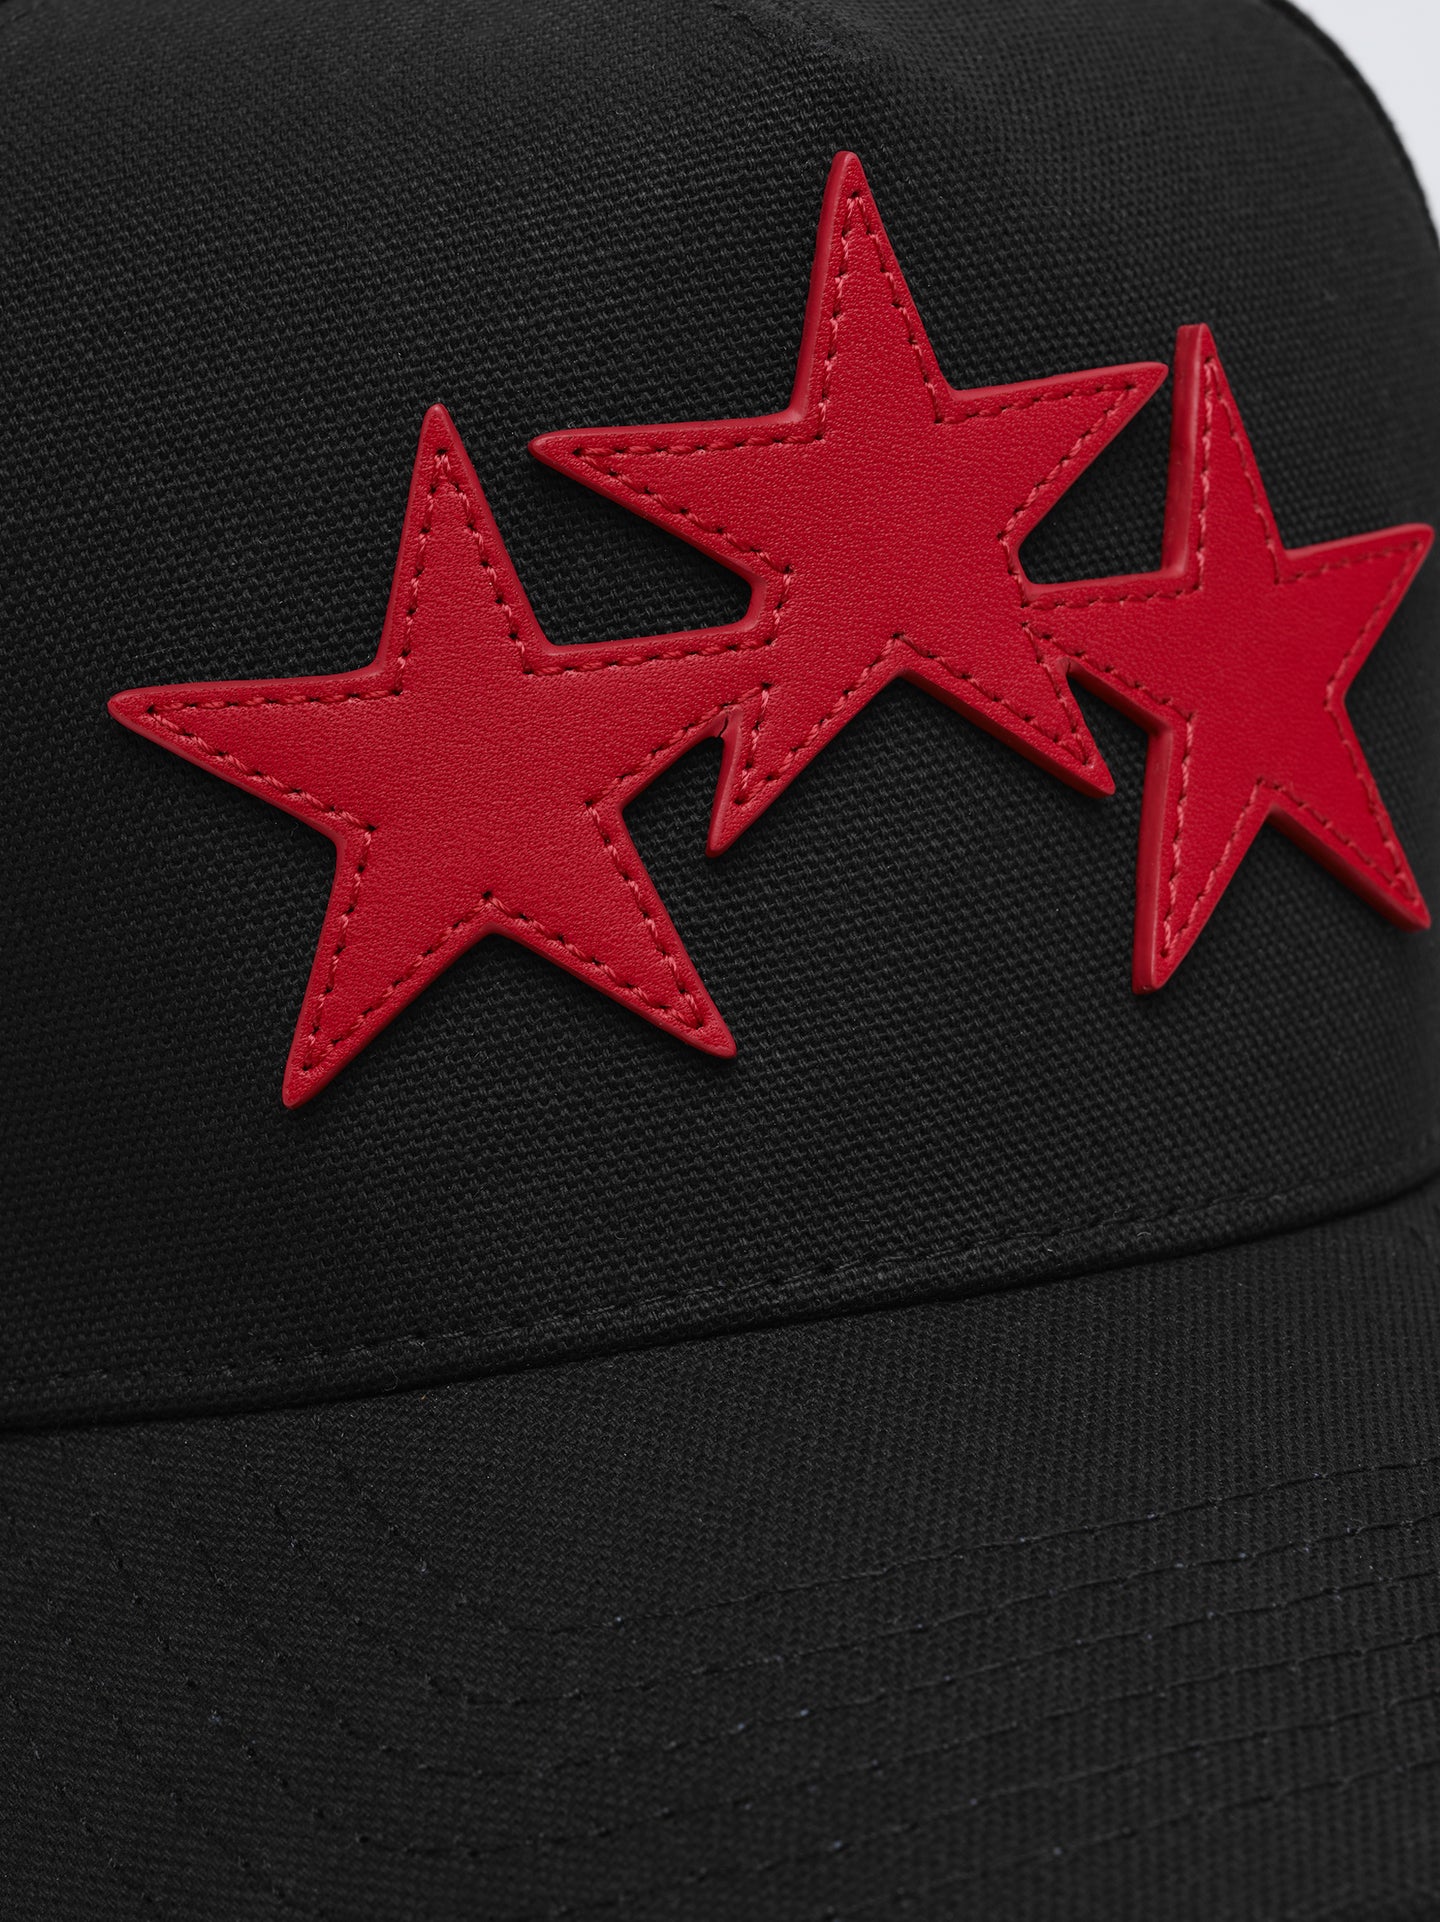 THREE STAR STAGGERED AMIRI FULL CANVAS HAT - Black Red